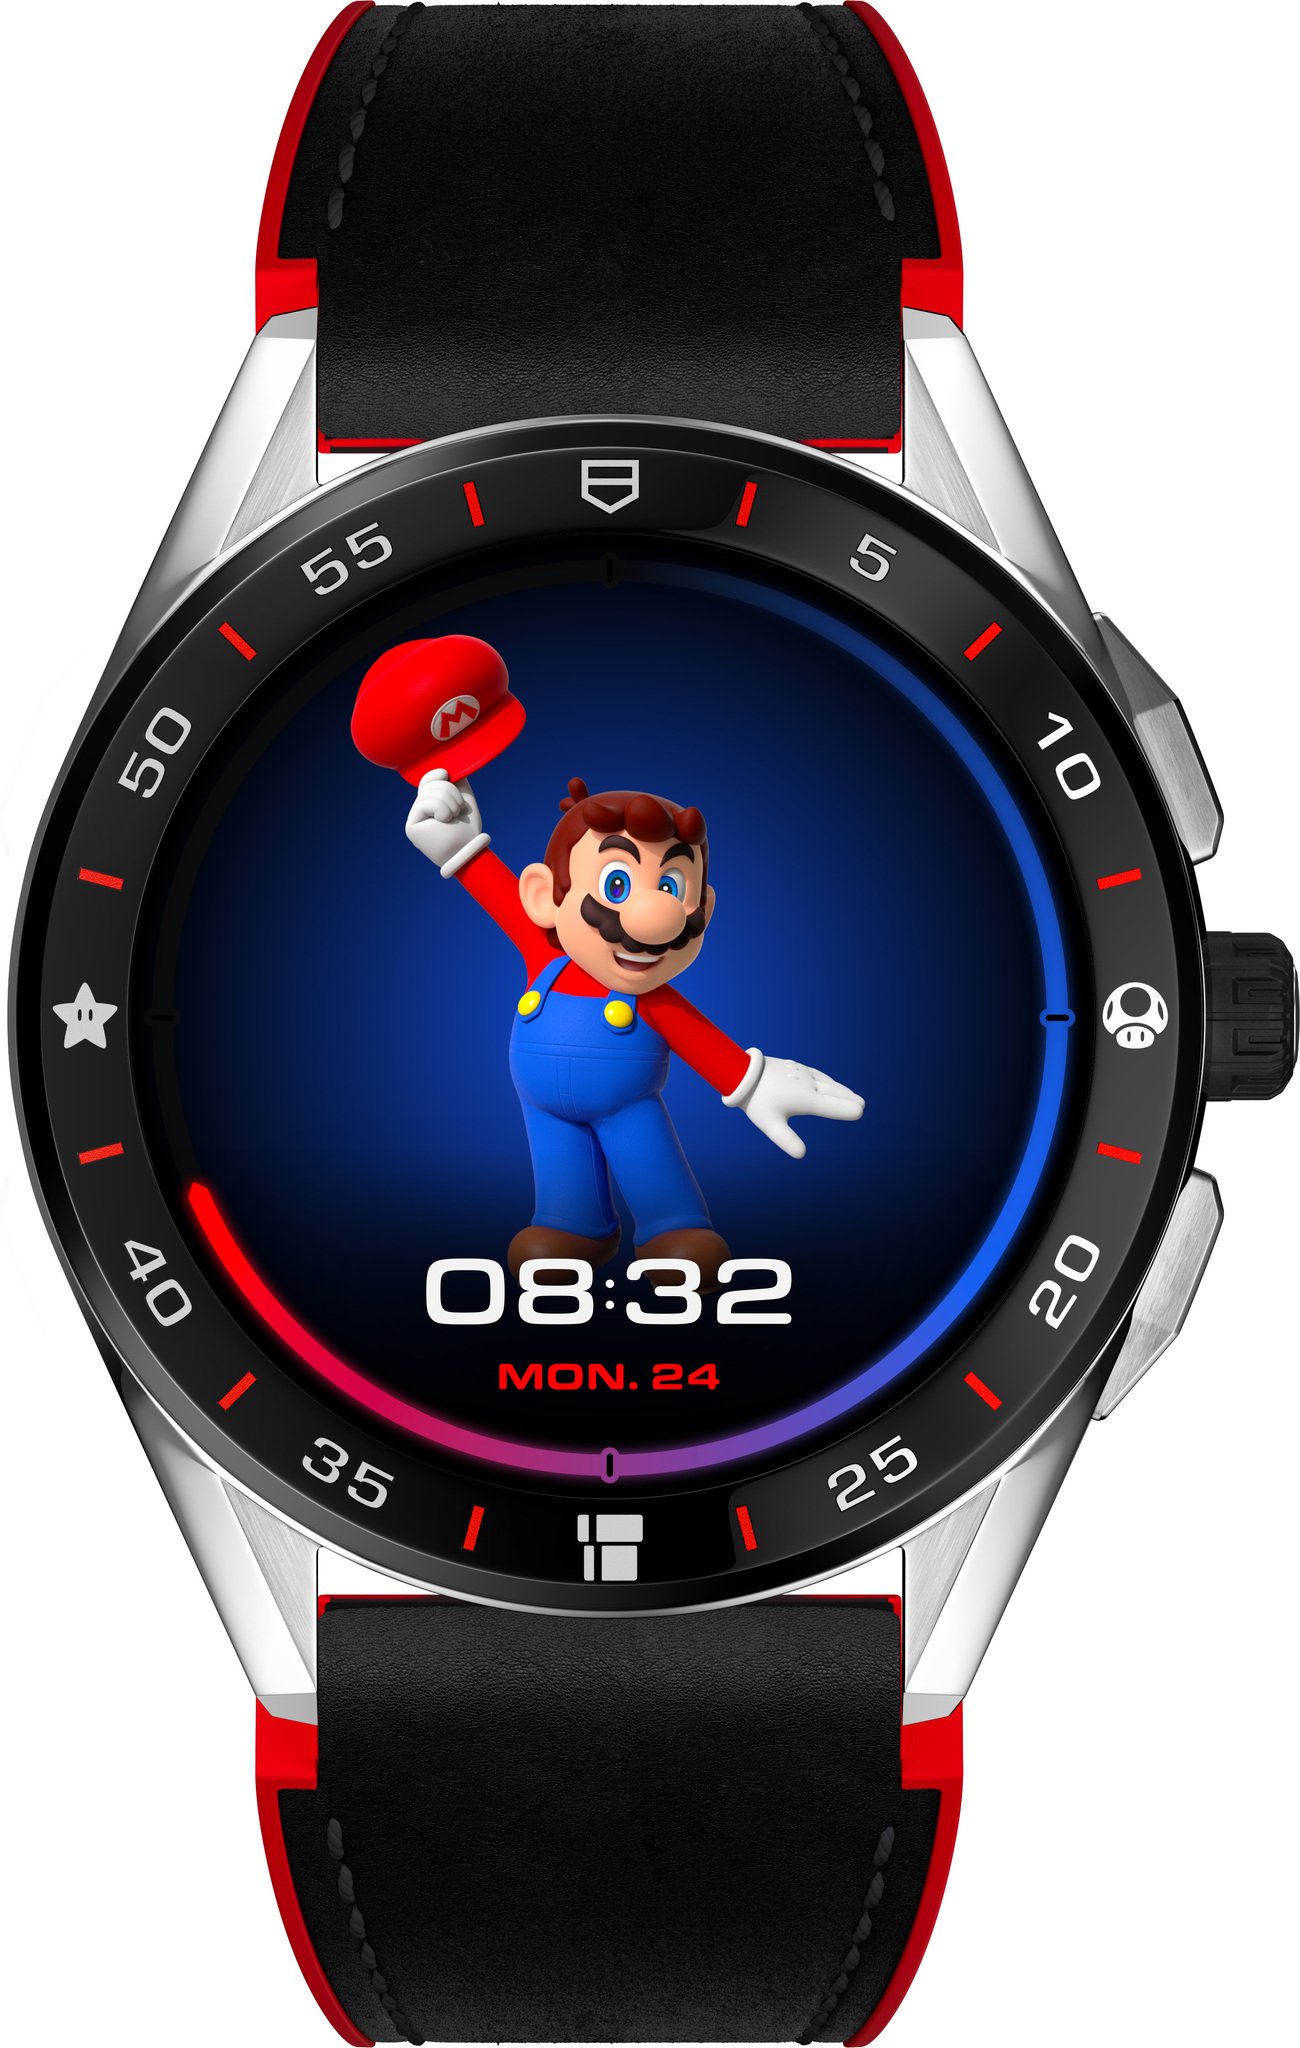 Tag Heuer Super Mario Wear Os Watch Crop